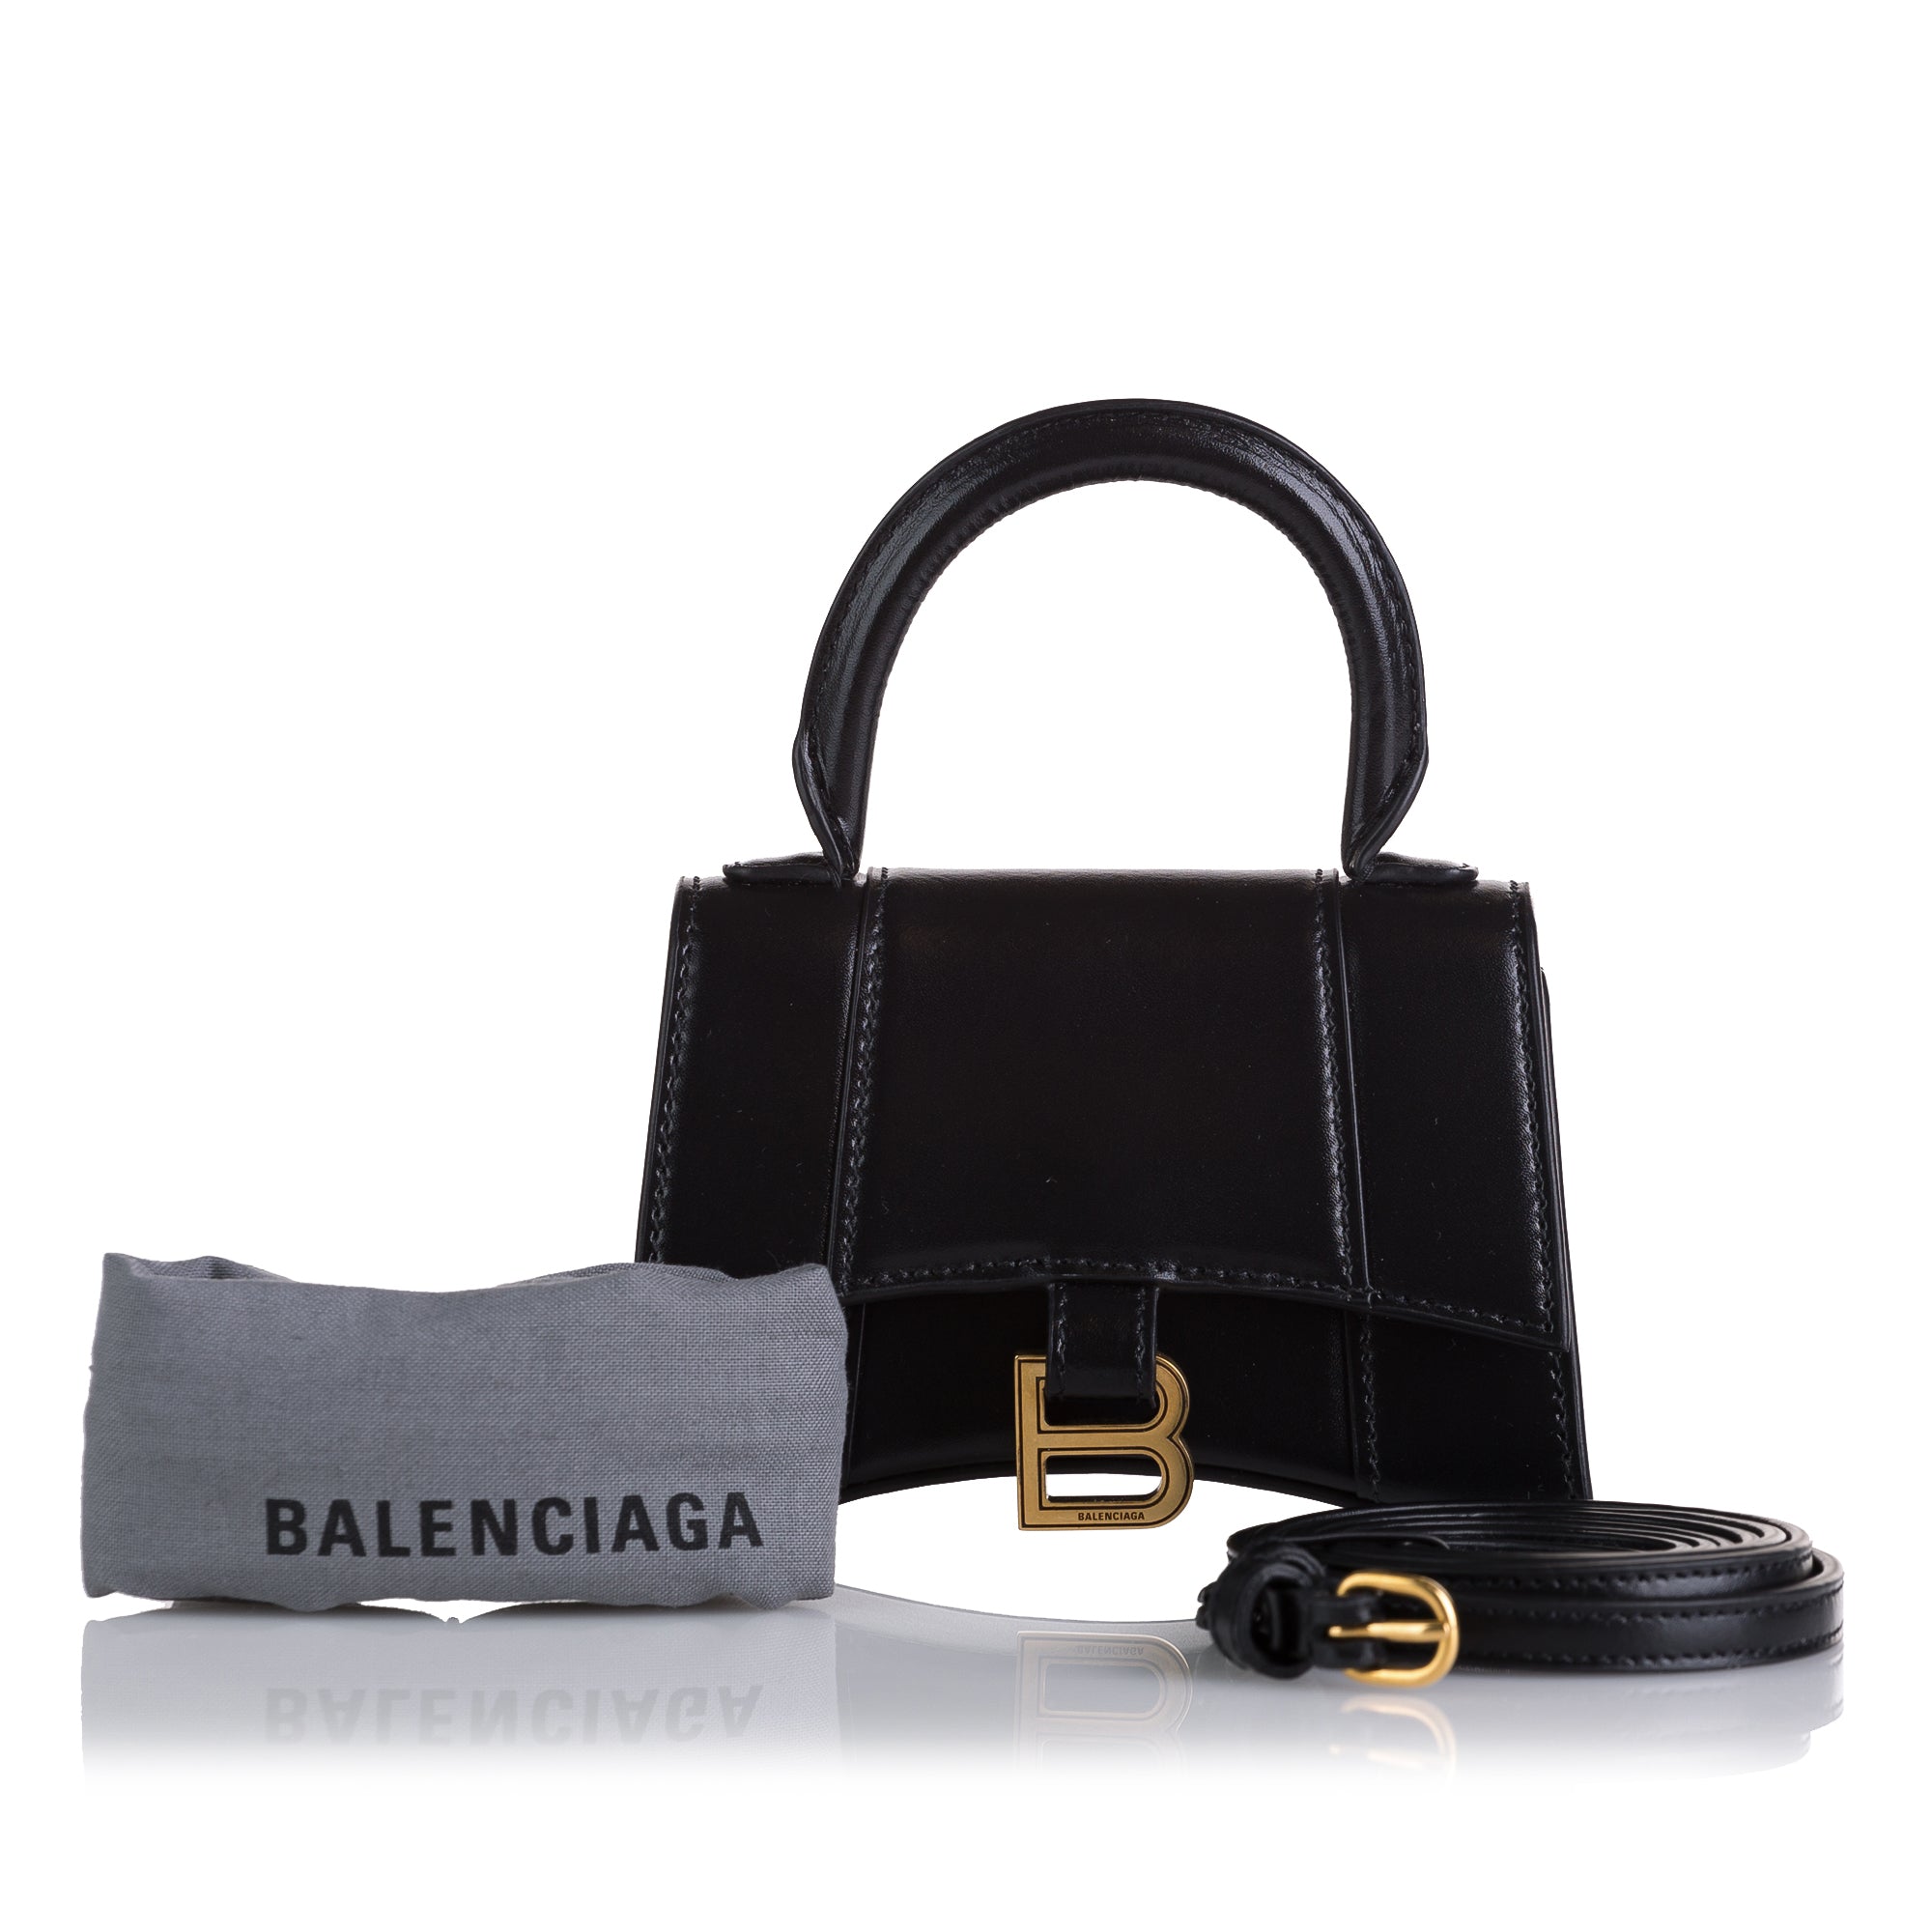 BALENCIAGA BLACK LEATHER BELT BAG